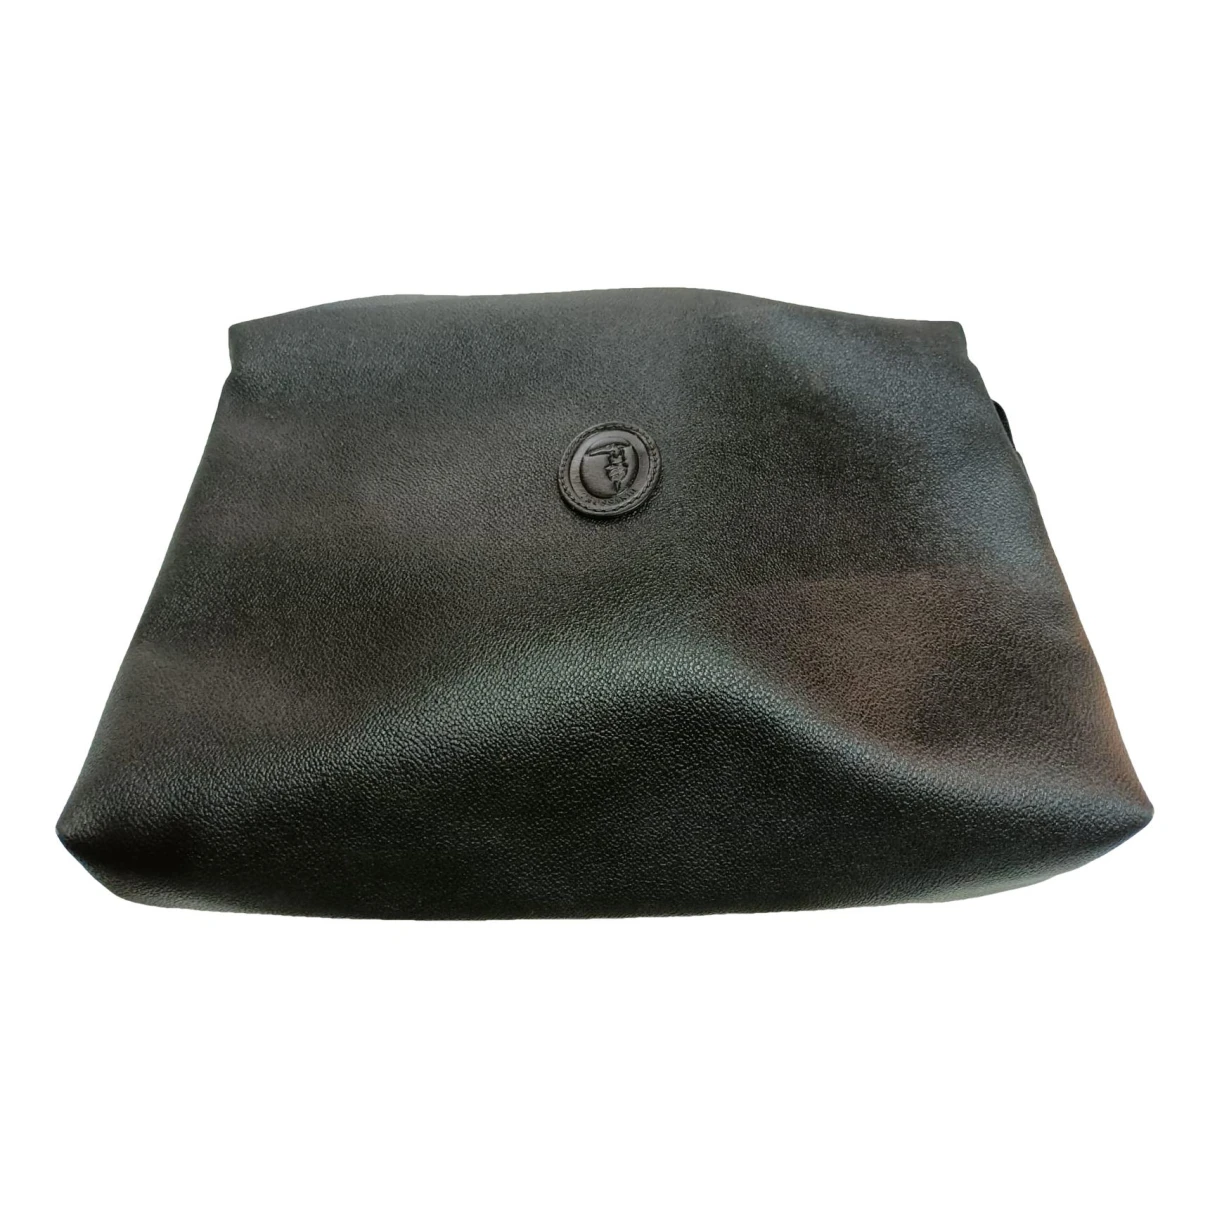 Pre-owned Trussardi Leather Clutch Bag In Black